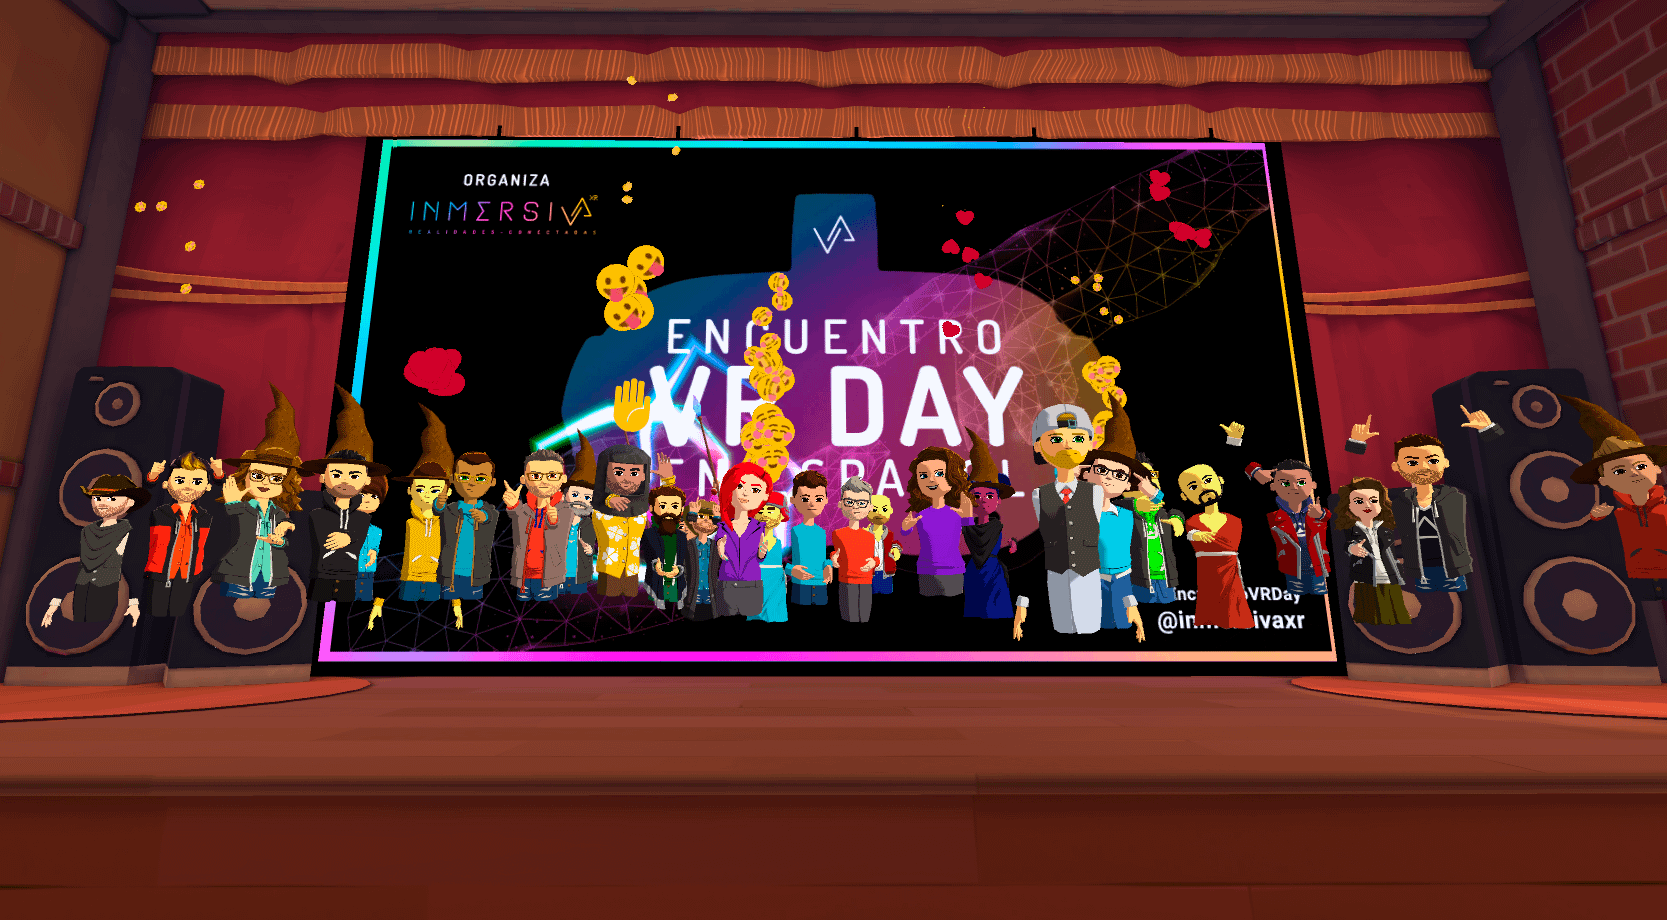 #EncuentroVRDay2020